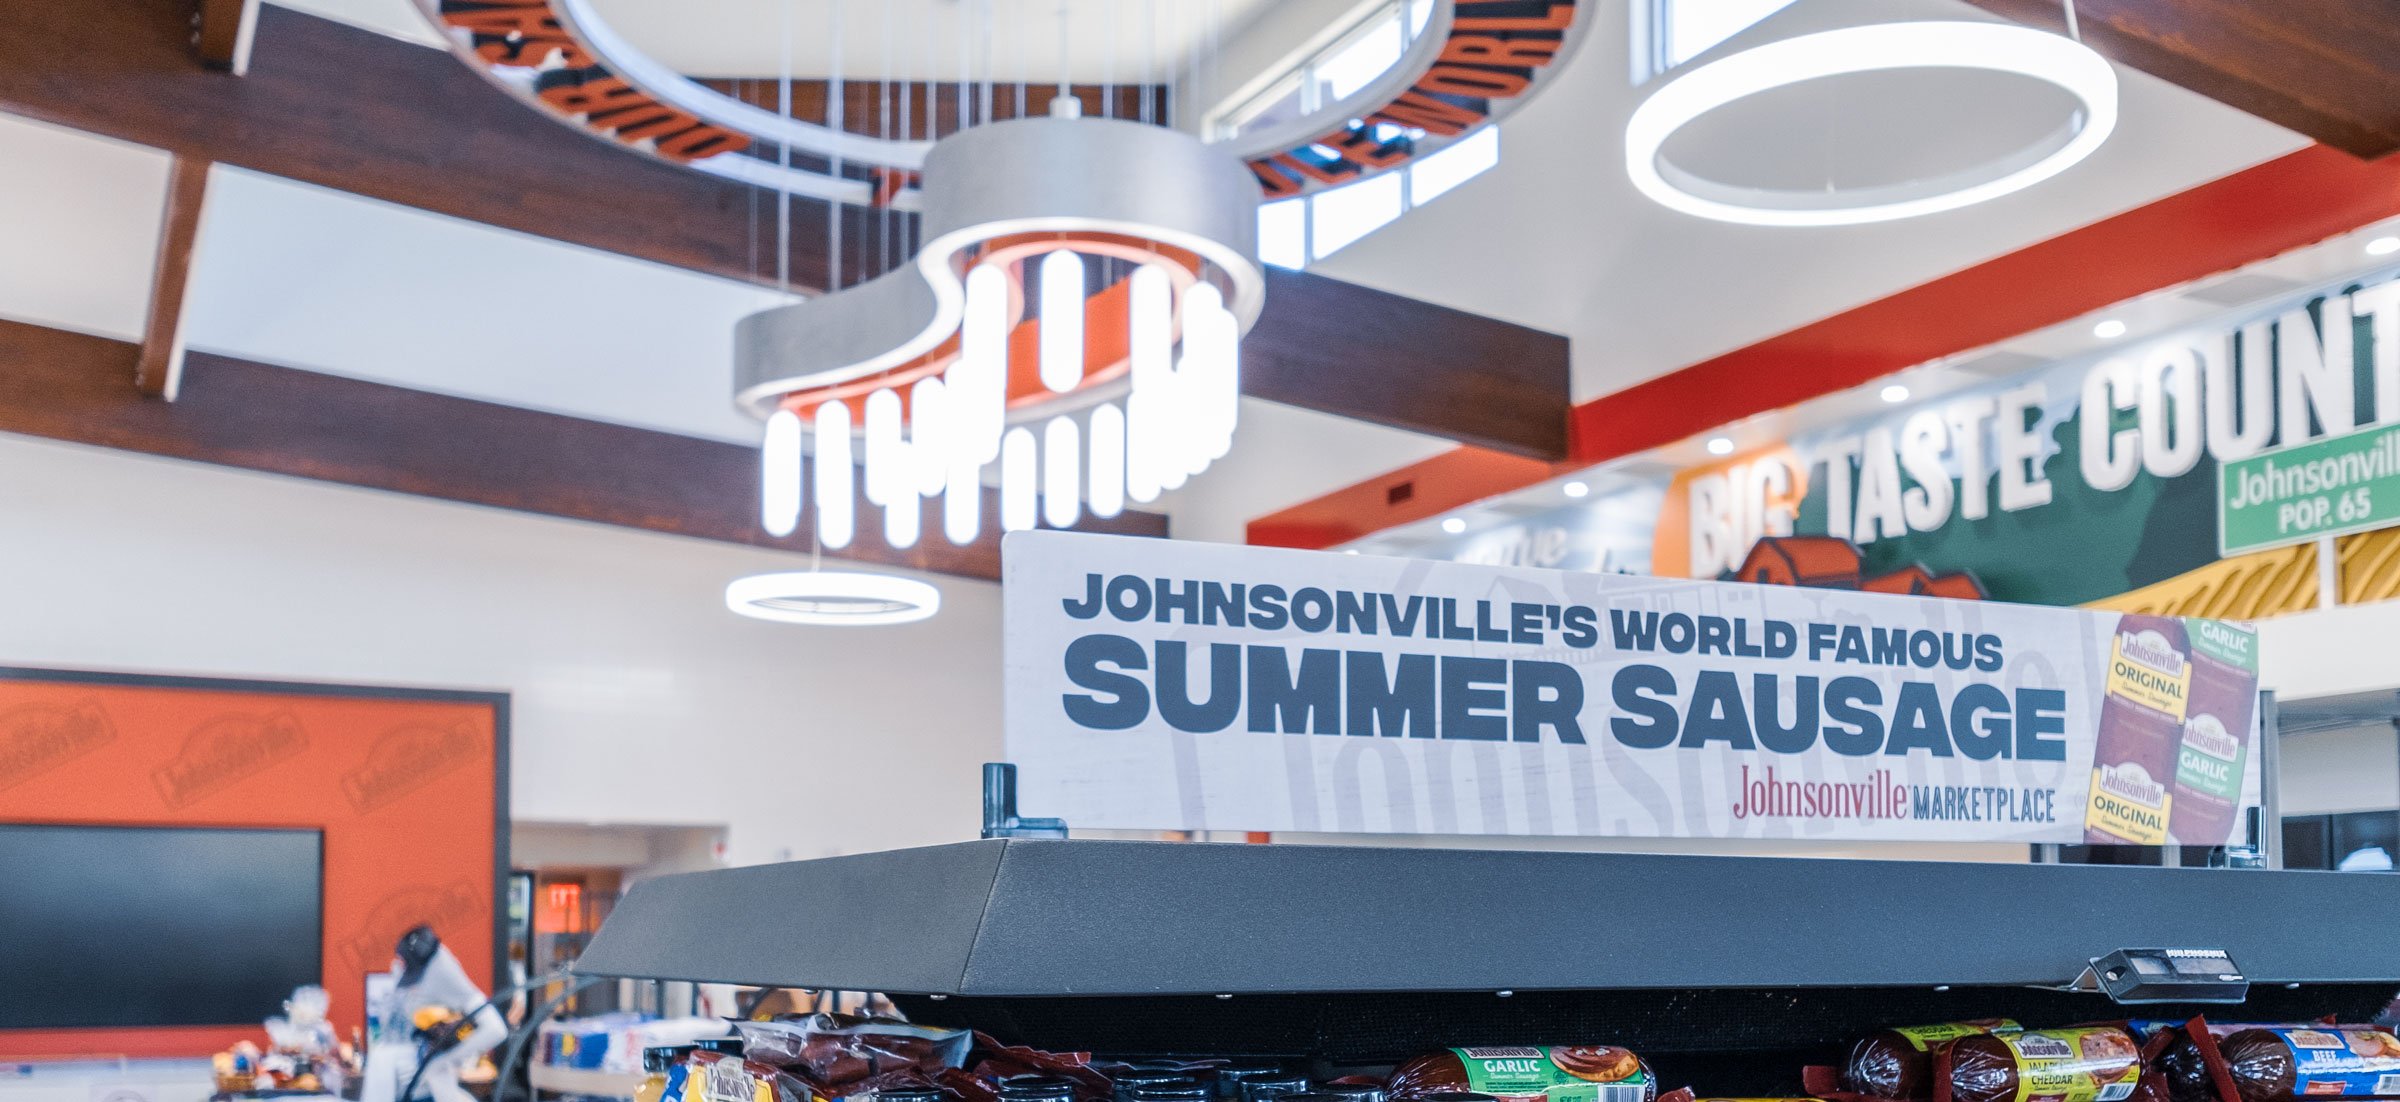 Johnsonville Marketplace Retail Shop Modern Exterior Facade & Interior Design Green Build by C.D. Smith Construction Manager